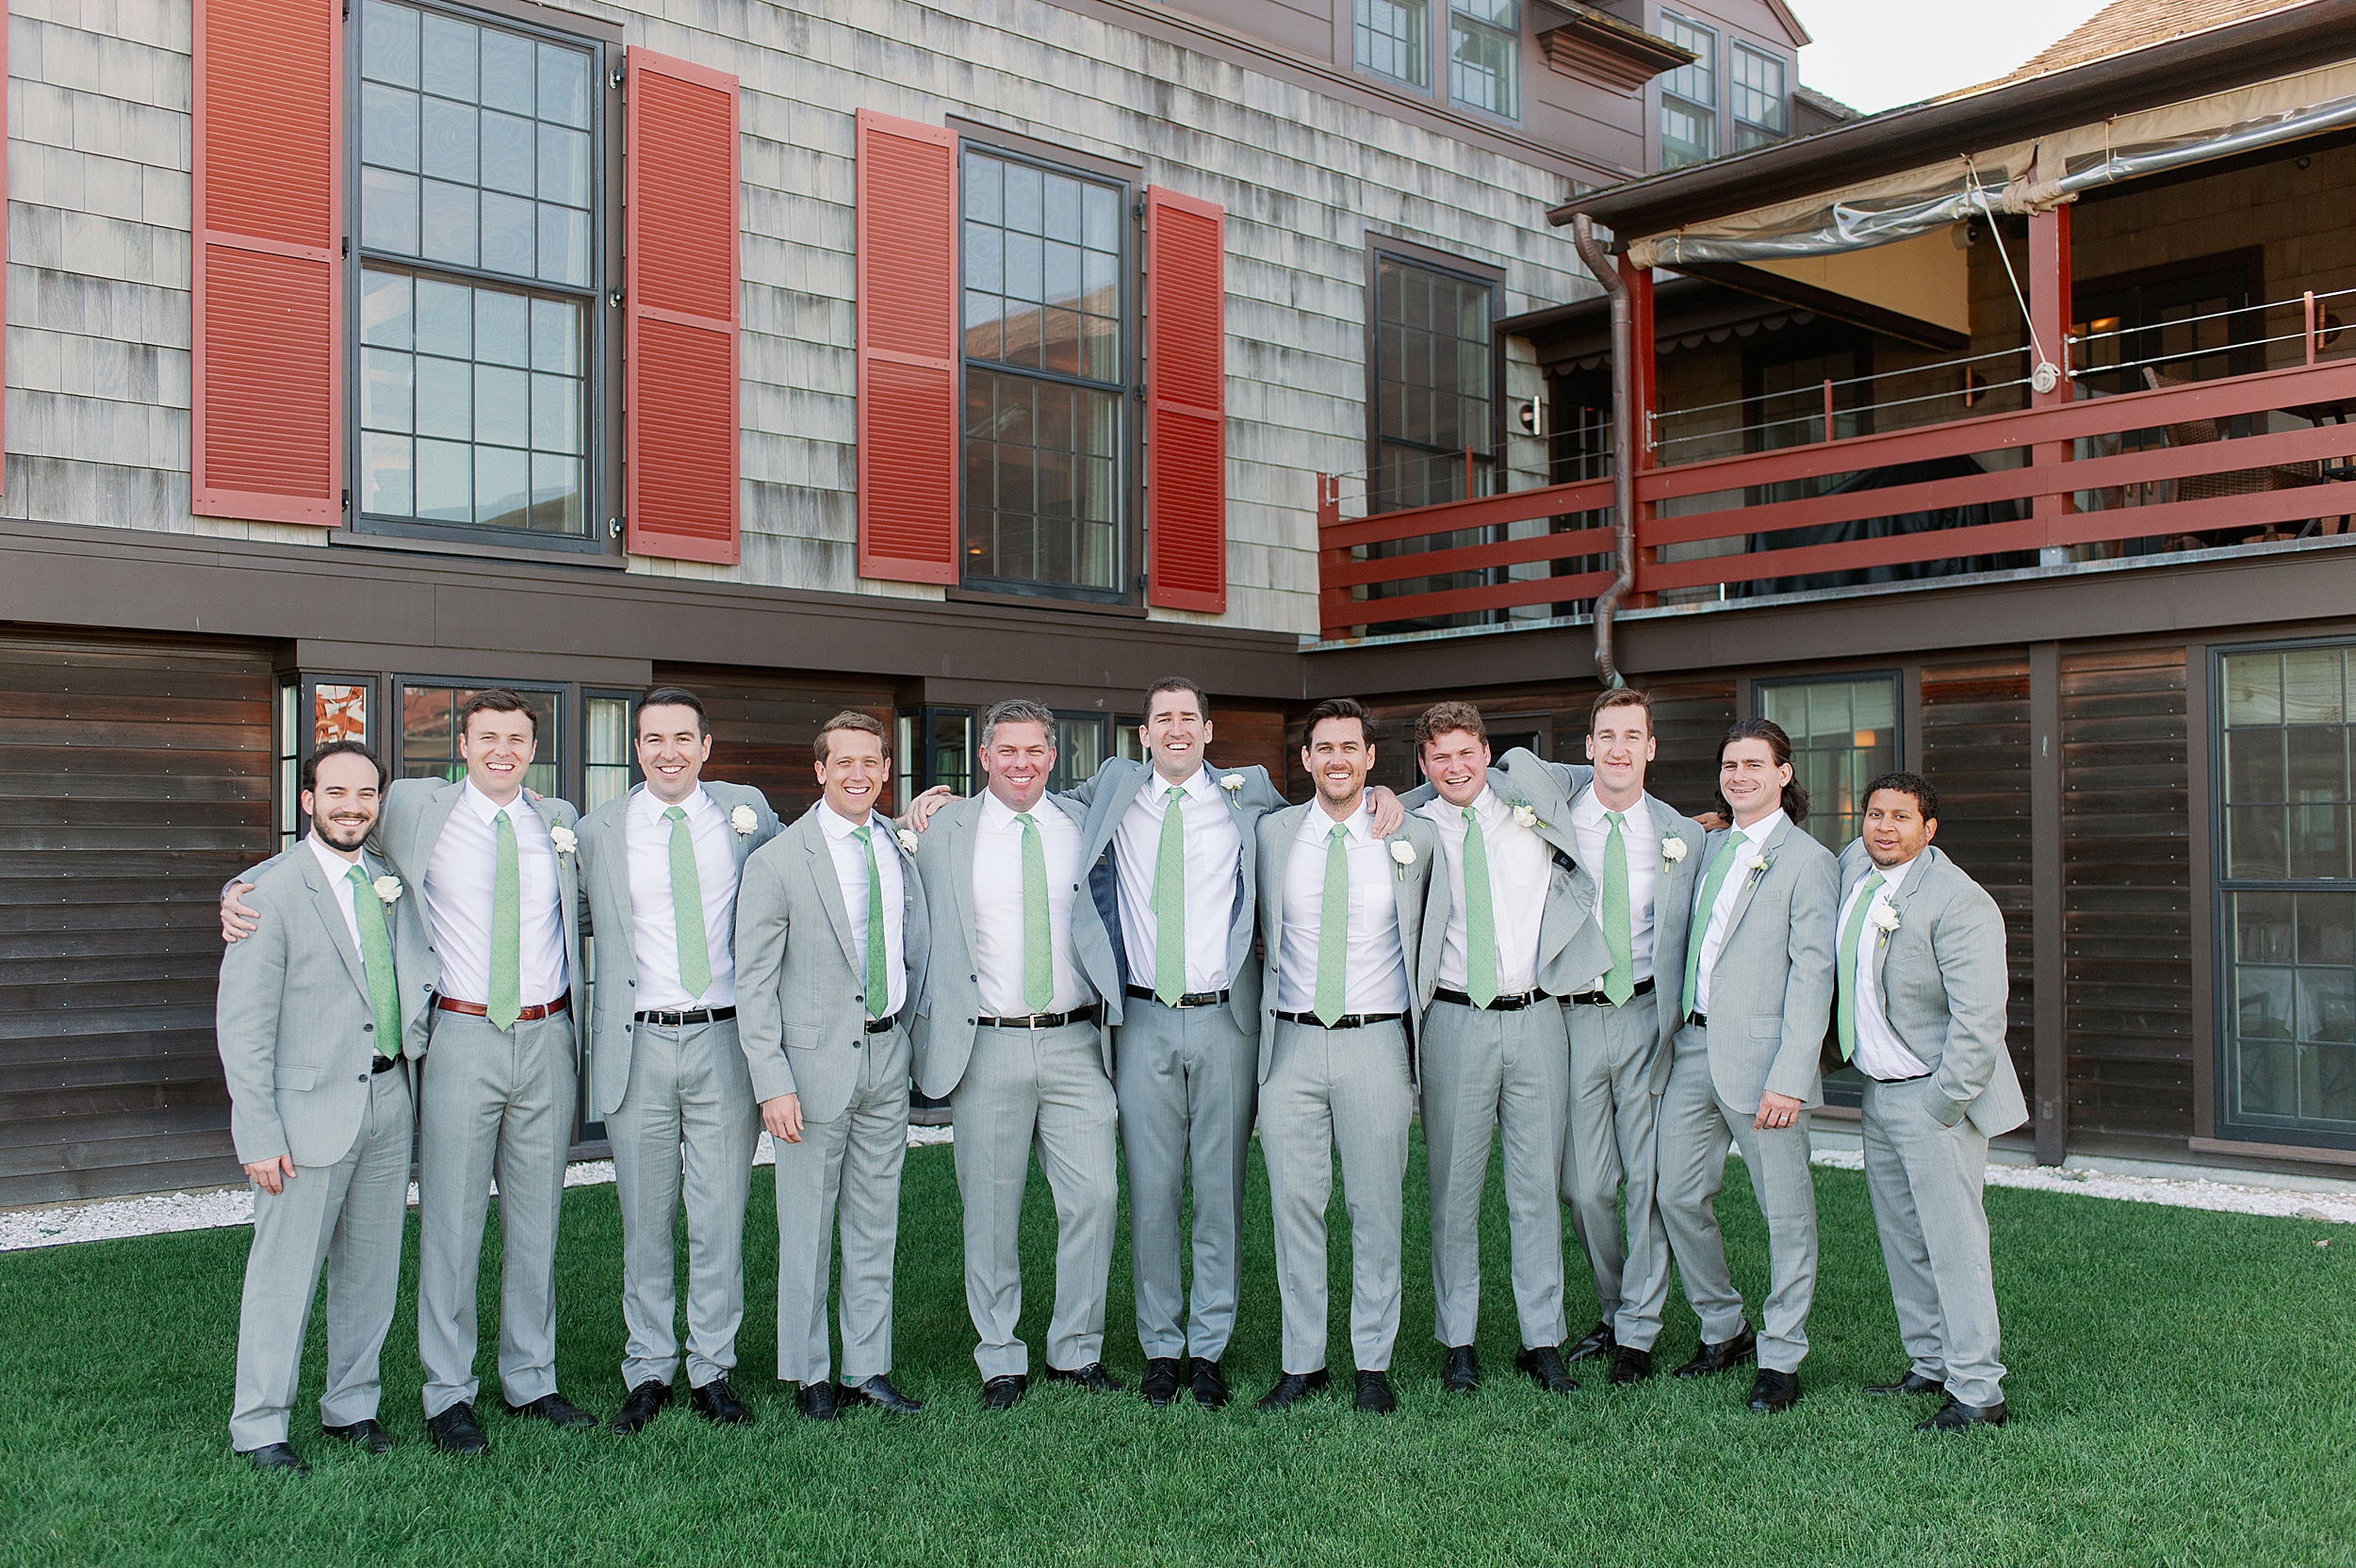 Groom and groomsmen in gray suits and preppy green ties